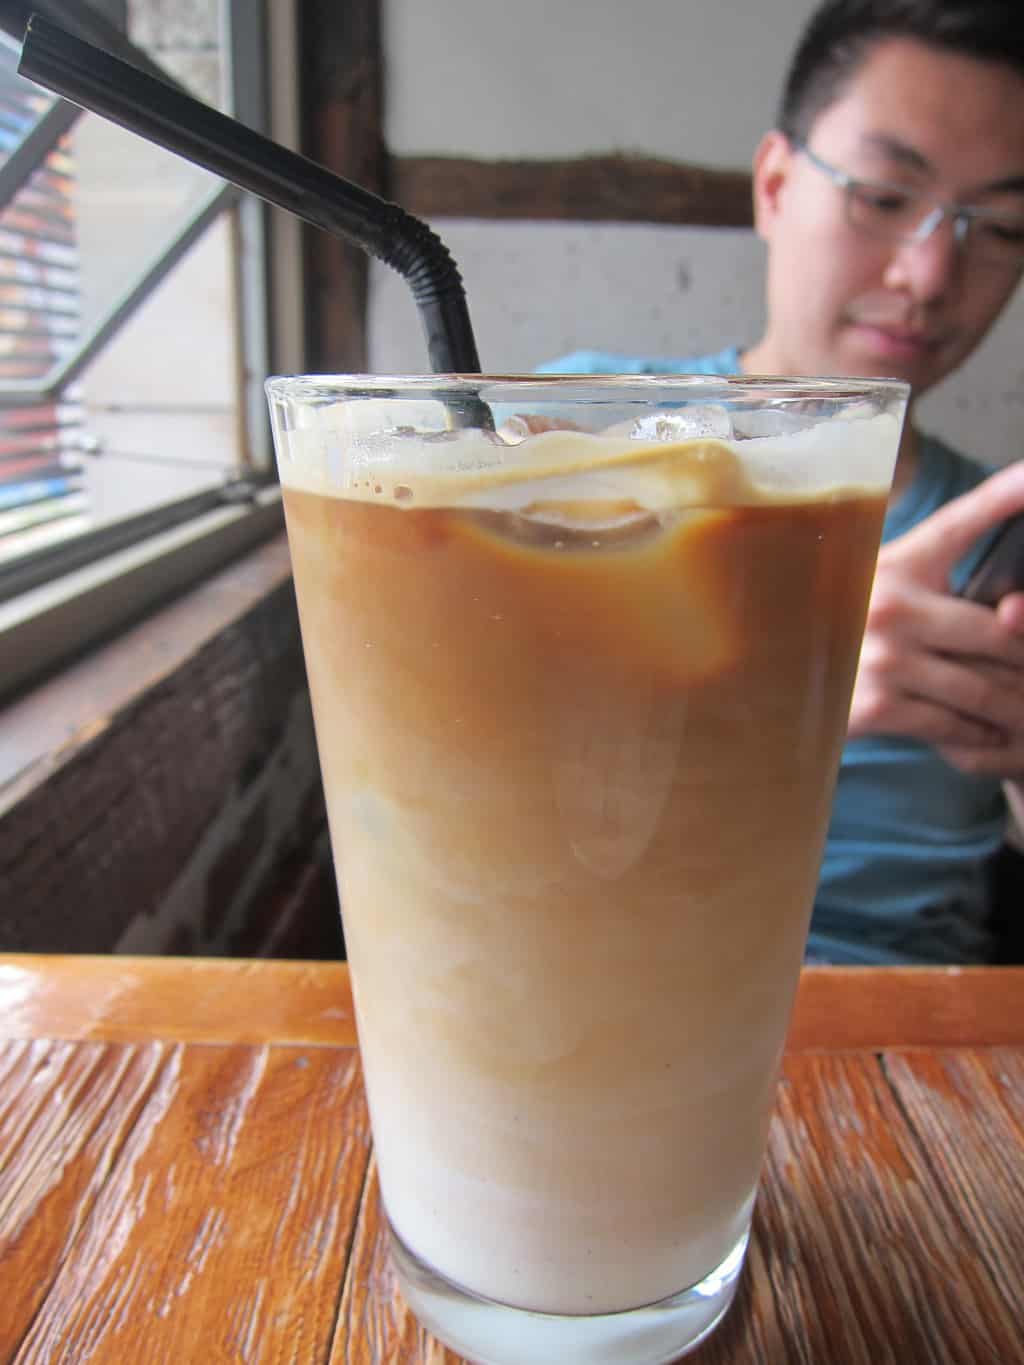 cafe latte (5000 won)